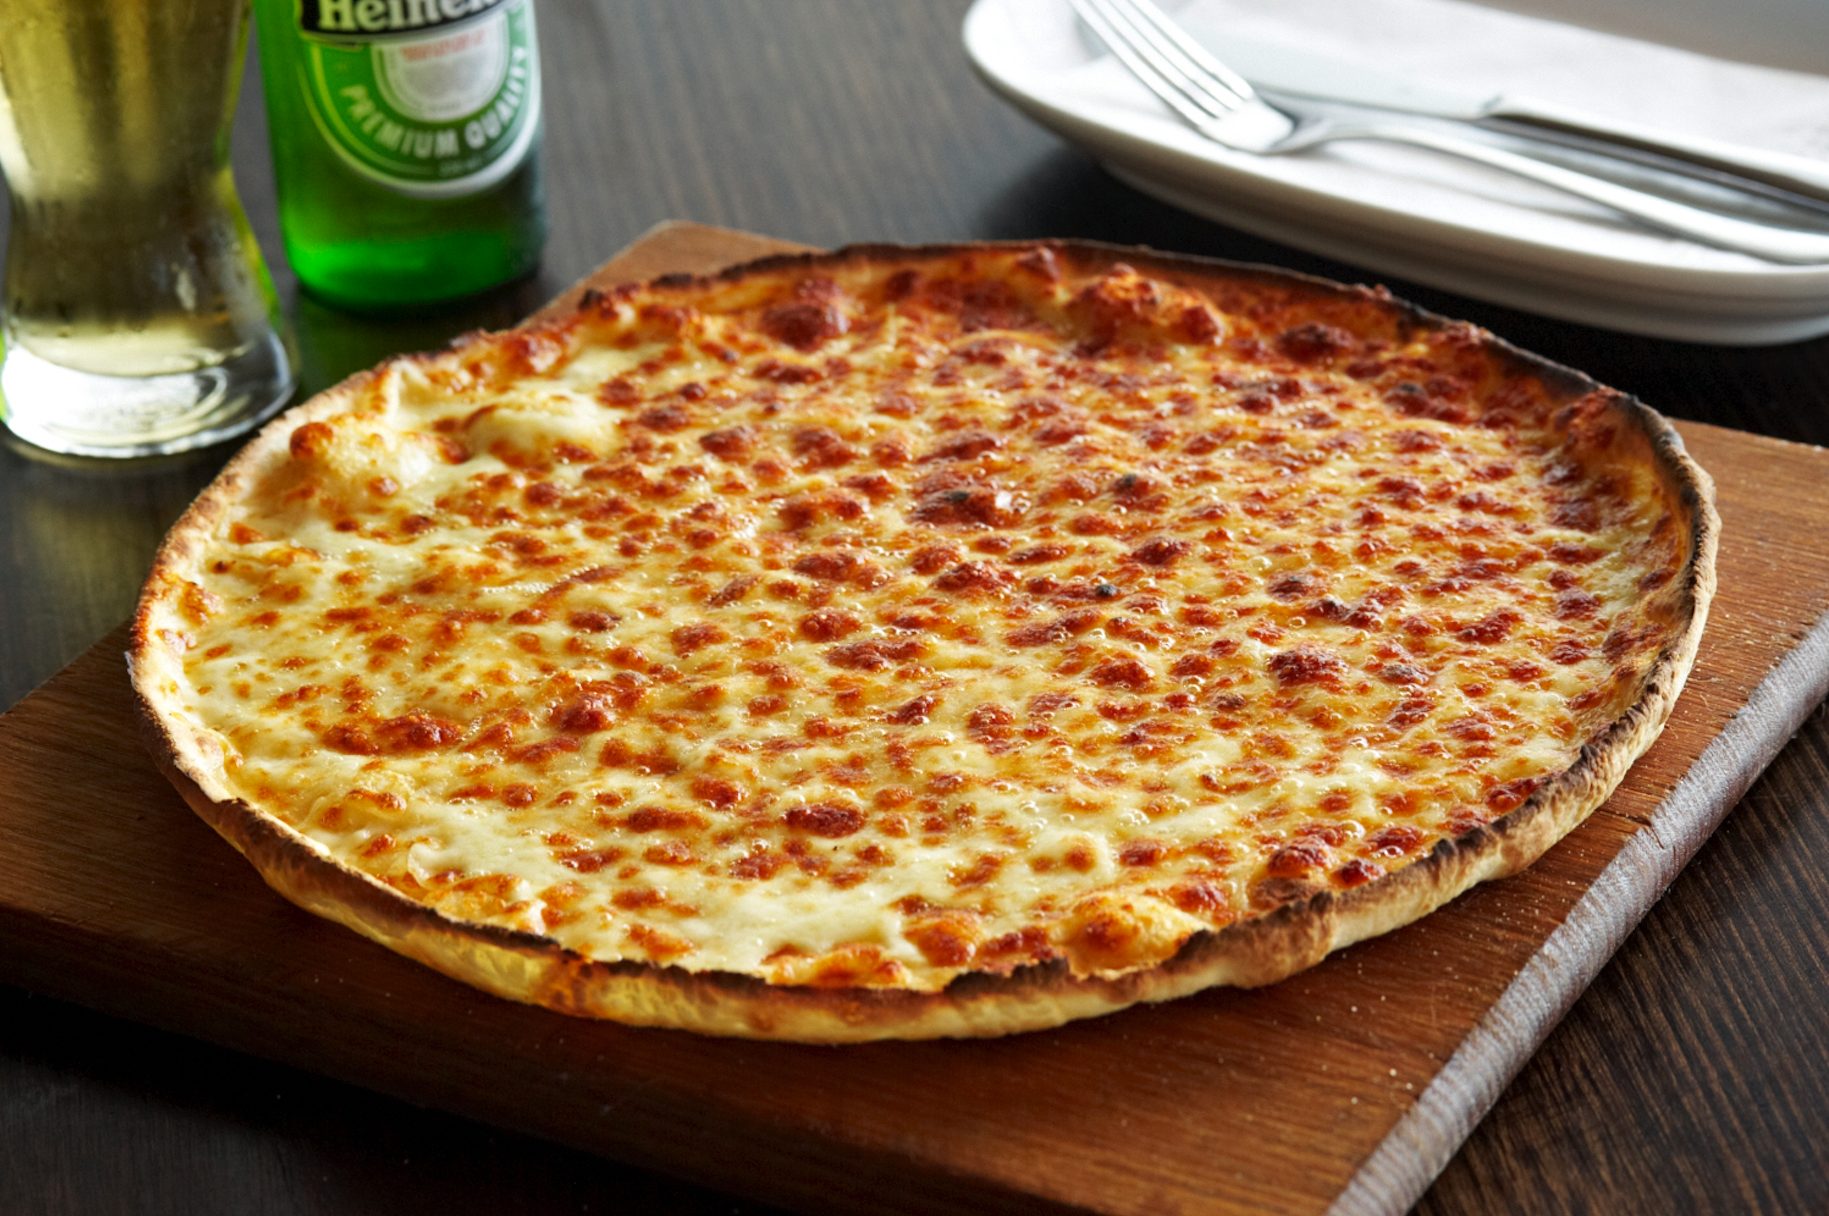 DEAL: Bondi Pizza - Free Garlic & Cheese Pizza with $45 Spend via DoorDash 6